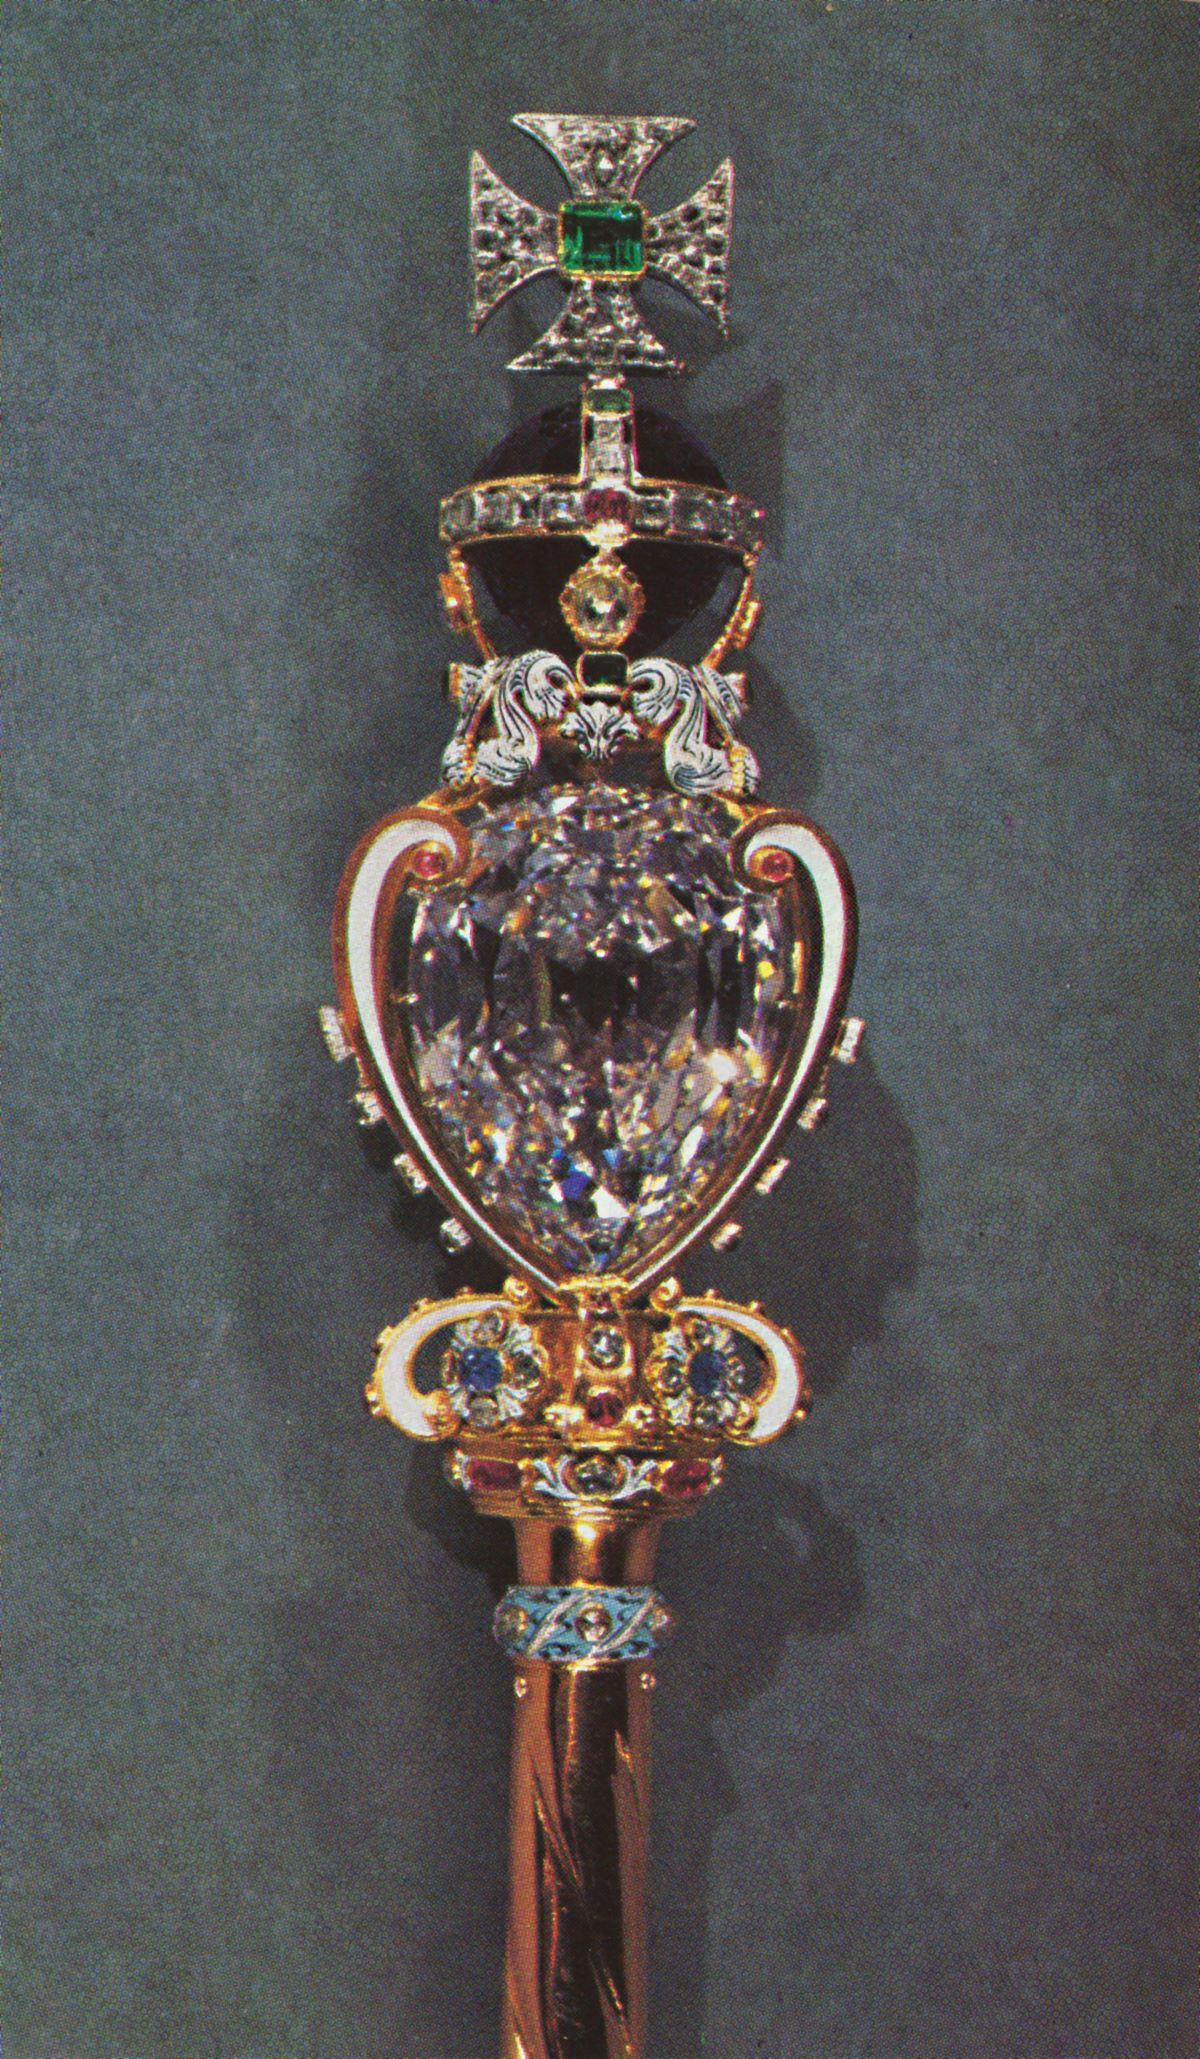 The royal sceptre